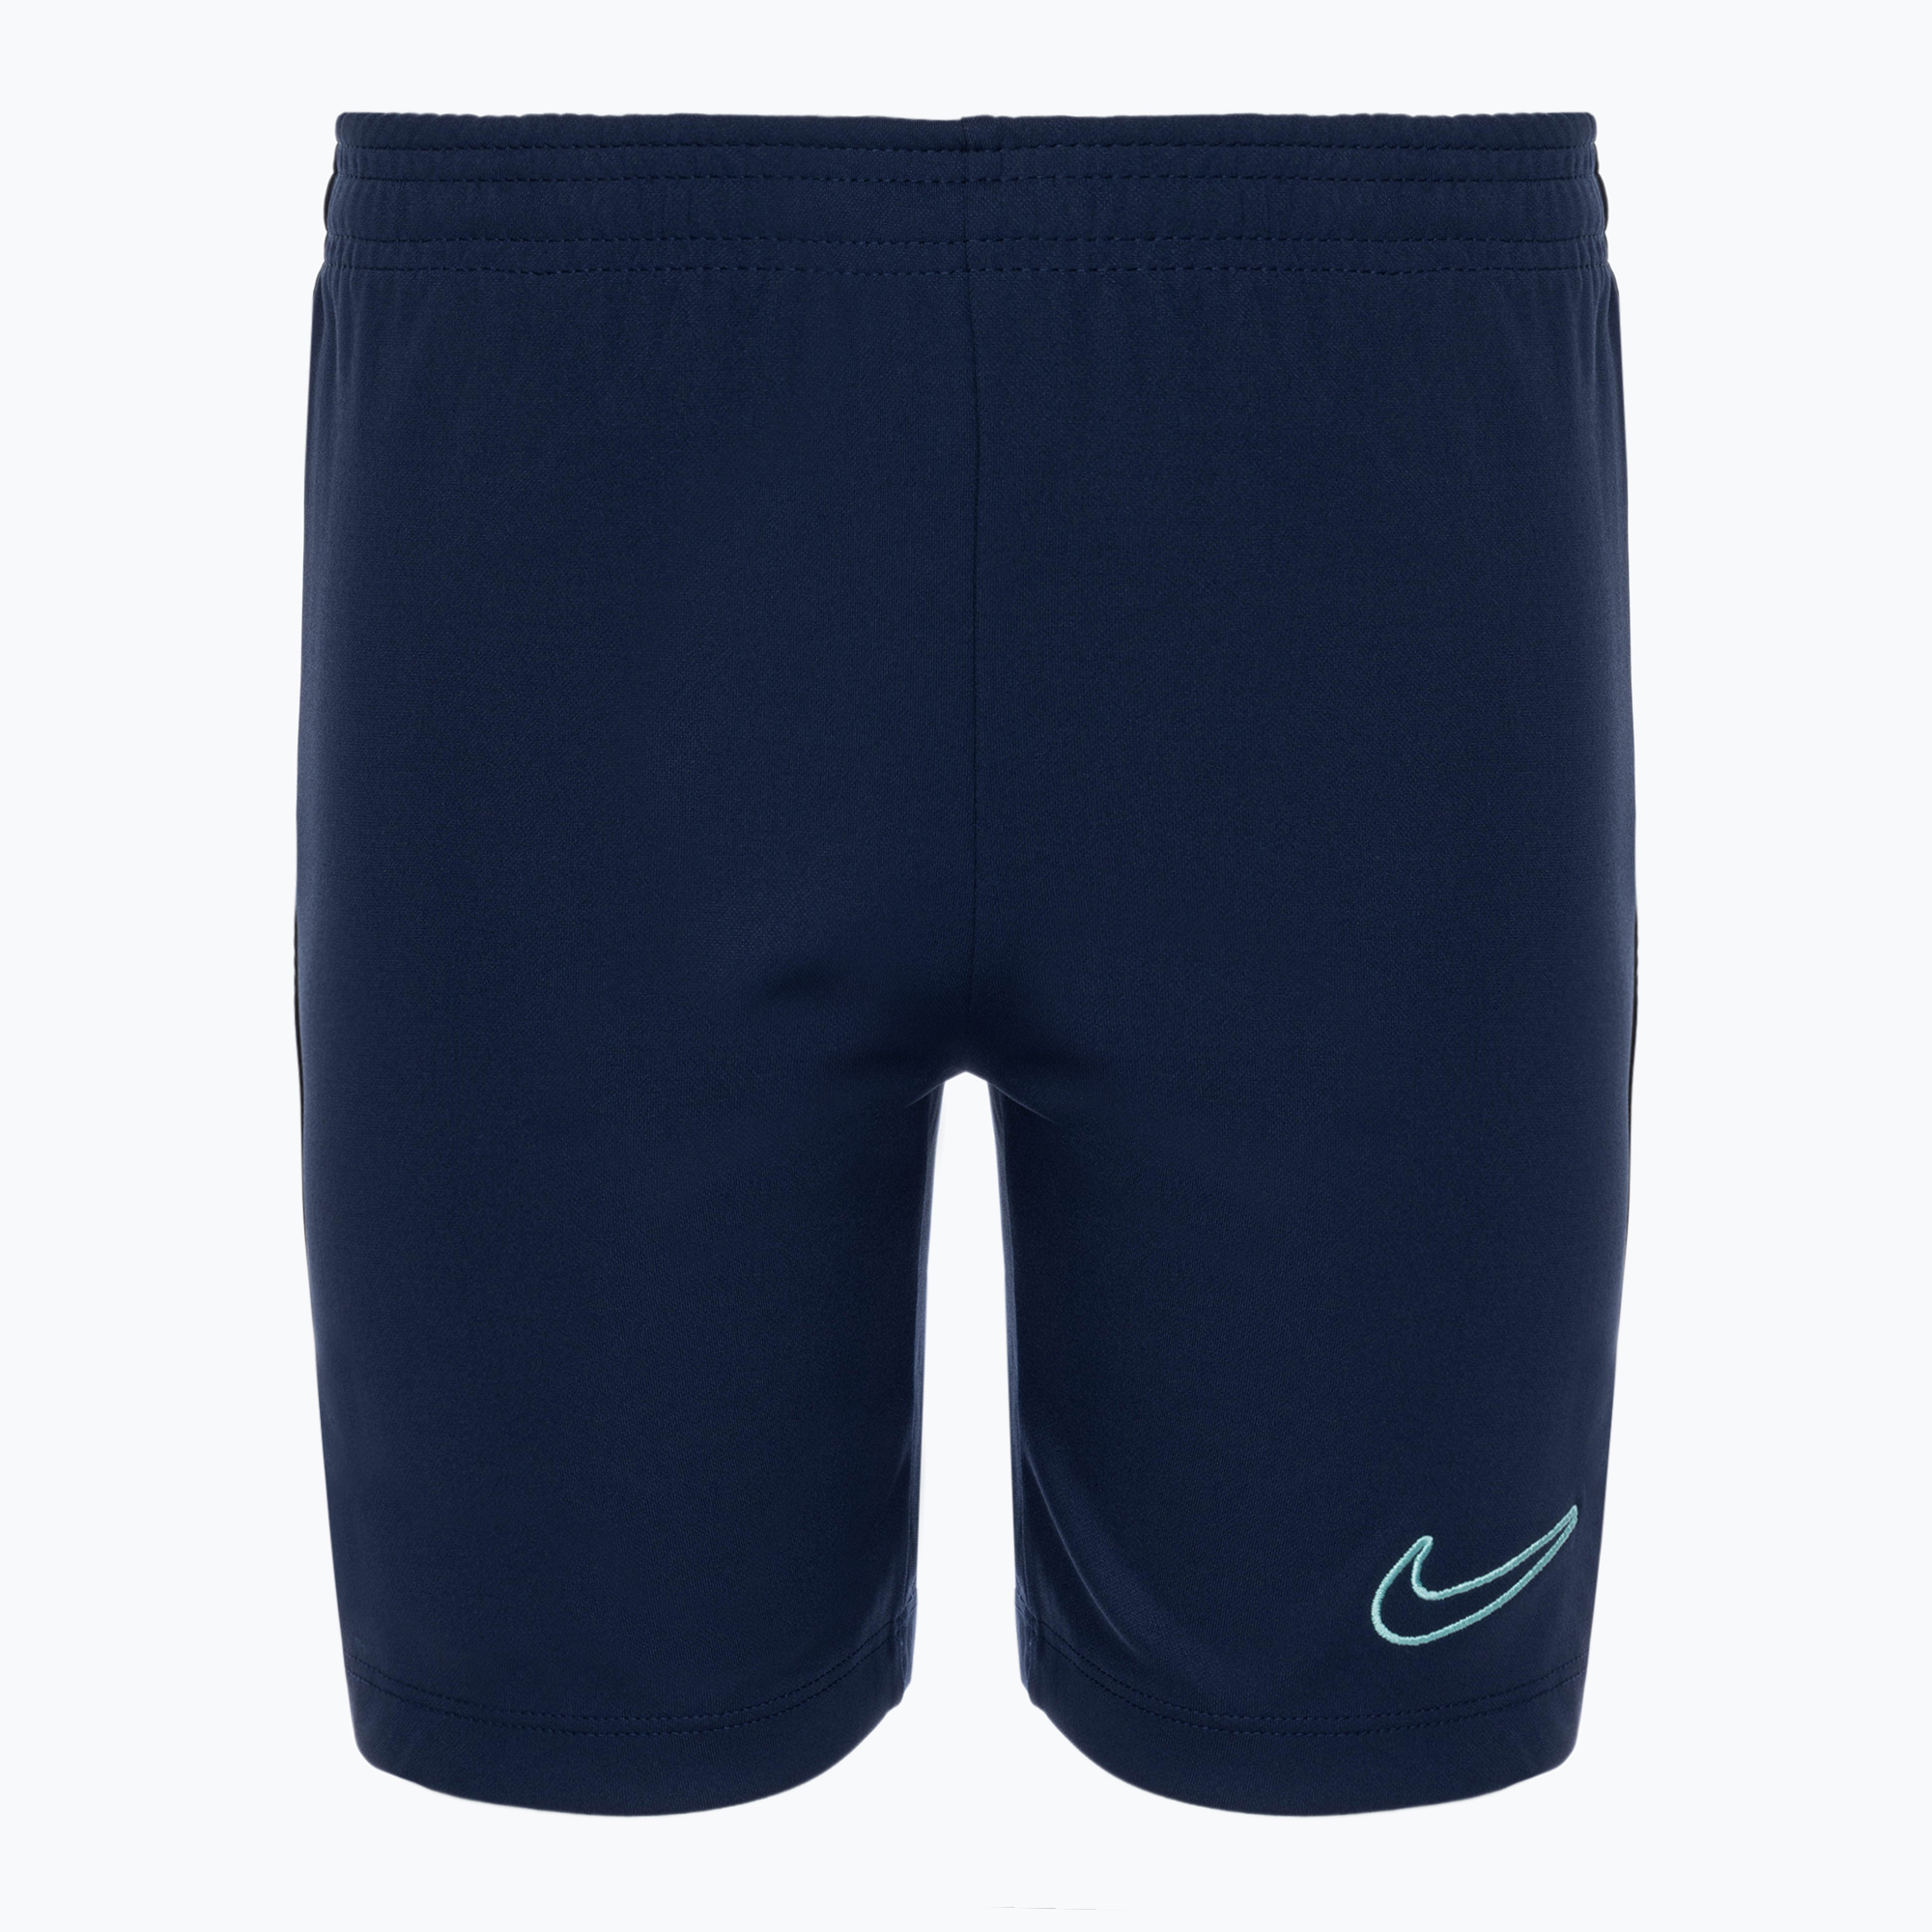 Detské futbalové šortky Nike Dri-Fit Academy23 midnight navy/black/hyper turquoise